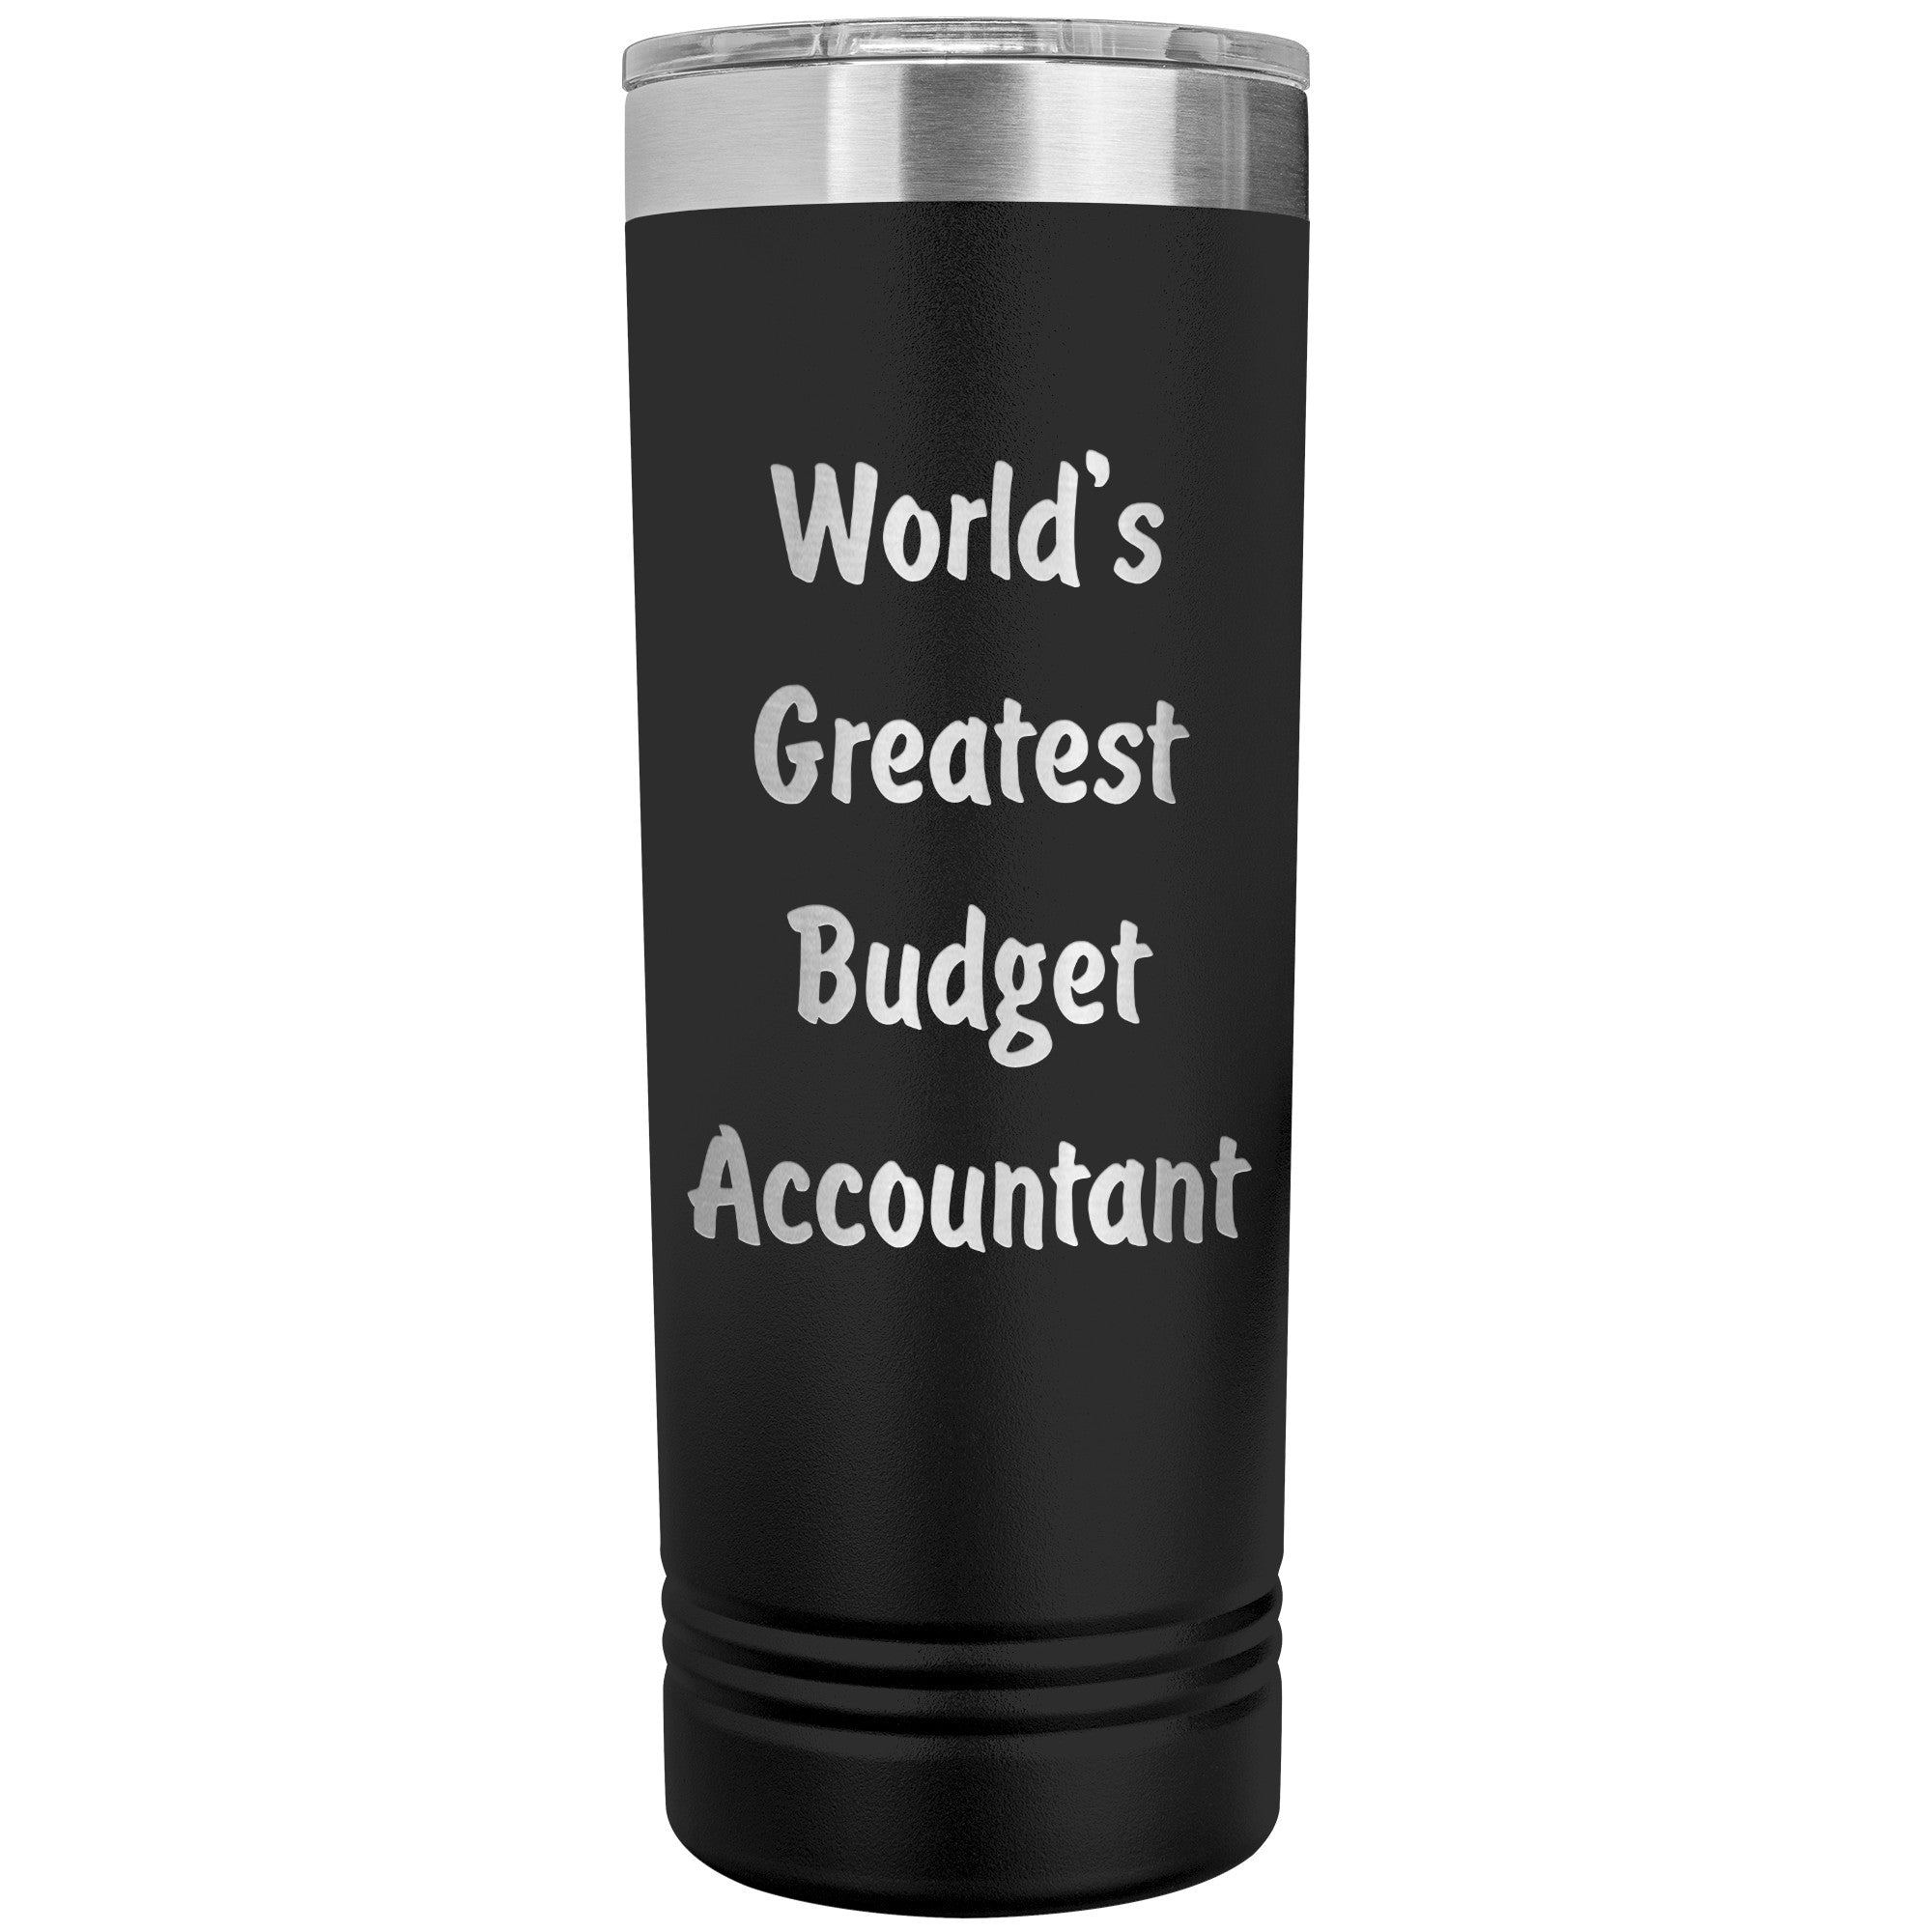 World's Greatest Budget Accountant - 22oz Insulated Skinny Tumbler